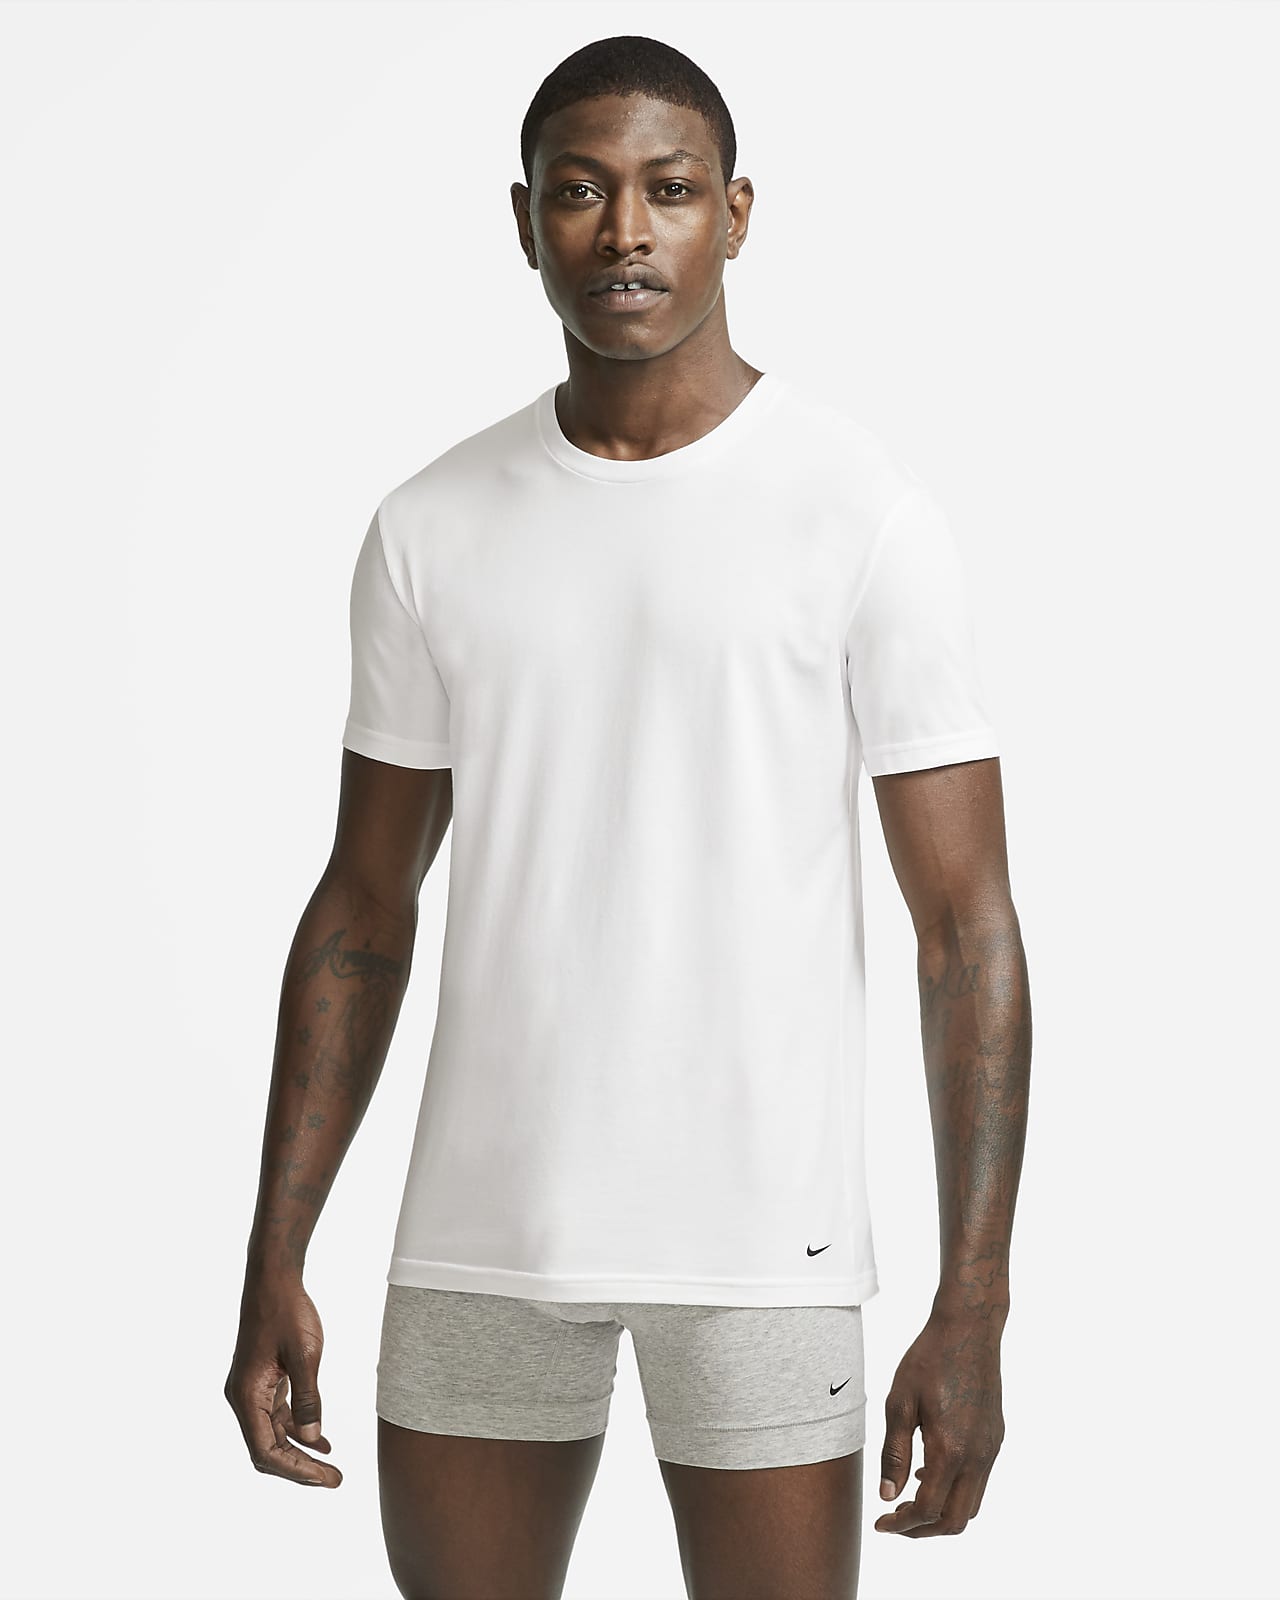 Nike Everyday Cotton Stretch Men's Slim Fit Crew-Neck Undershirt (2-Pack)